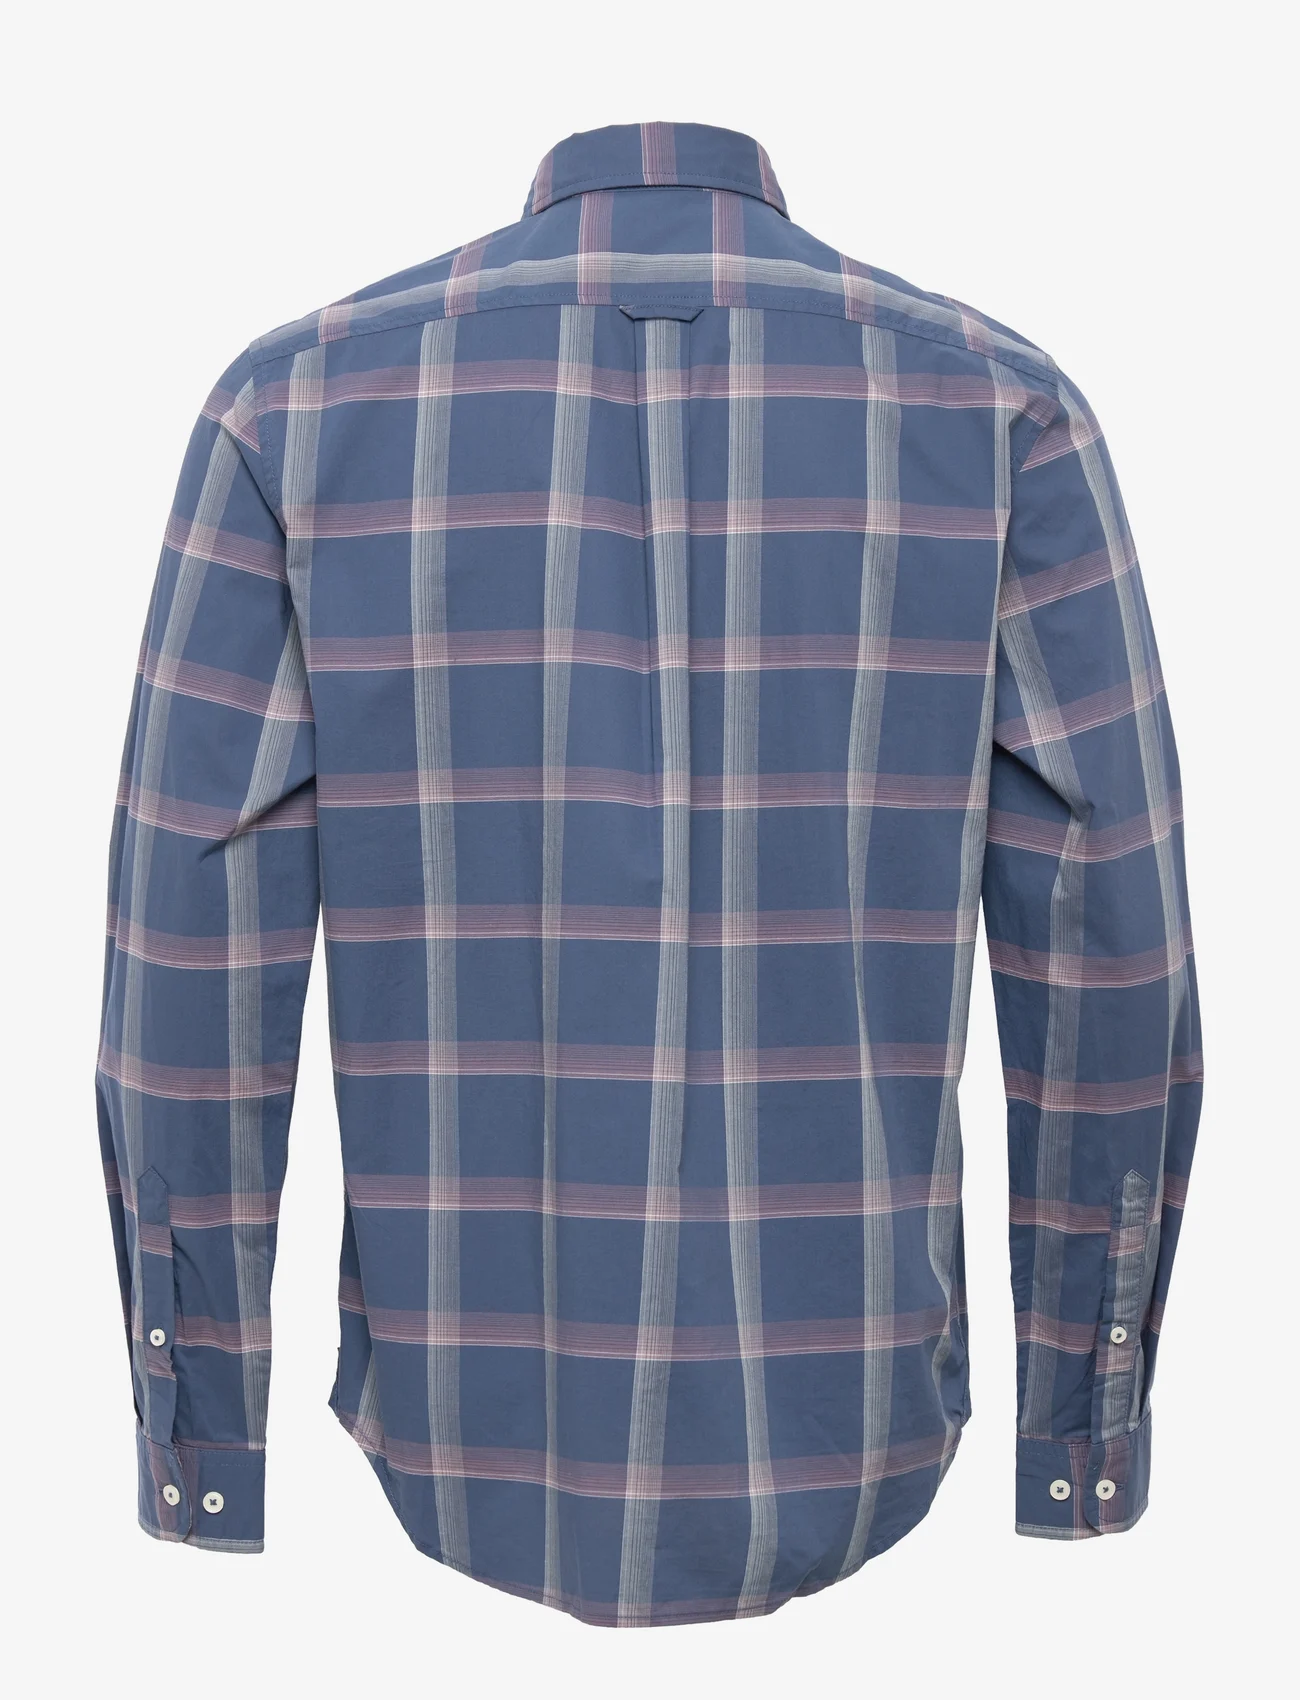 Timberland - LS Strtch Poplin Check - rutede skjorter - dark denim yd - 1